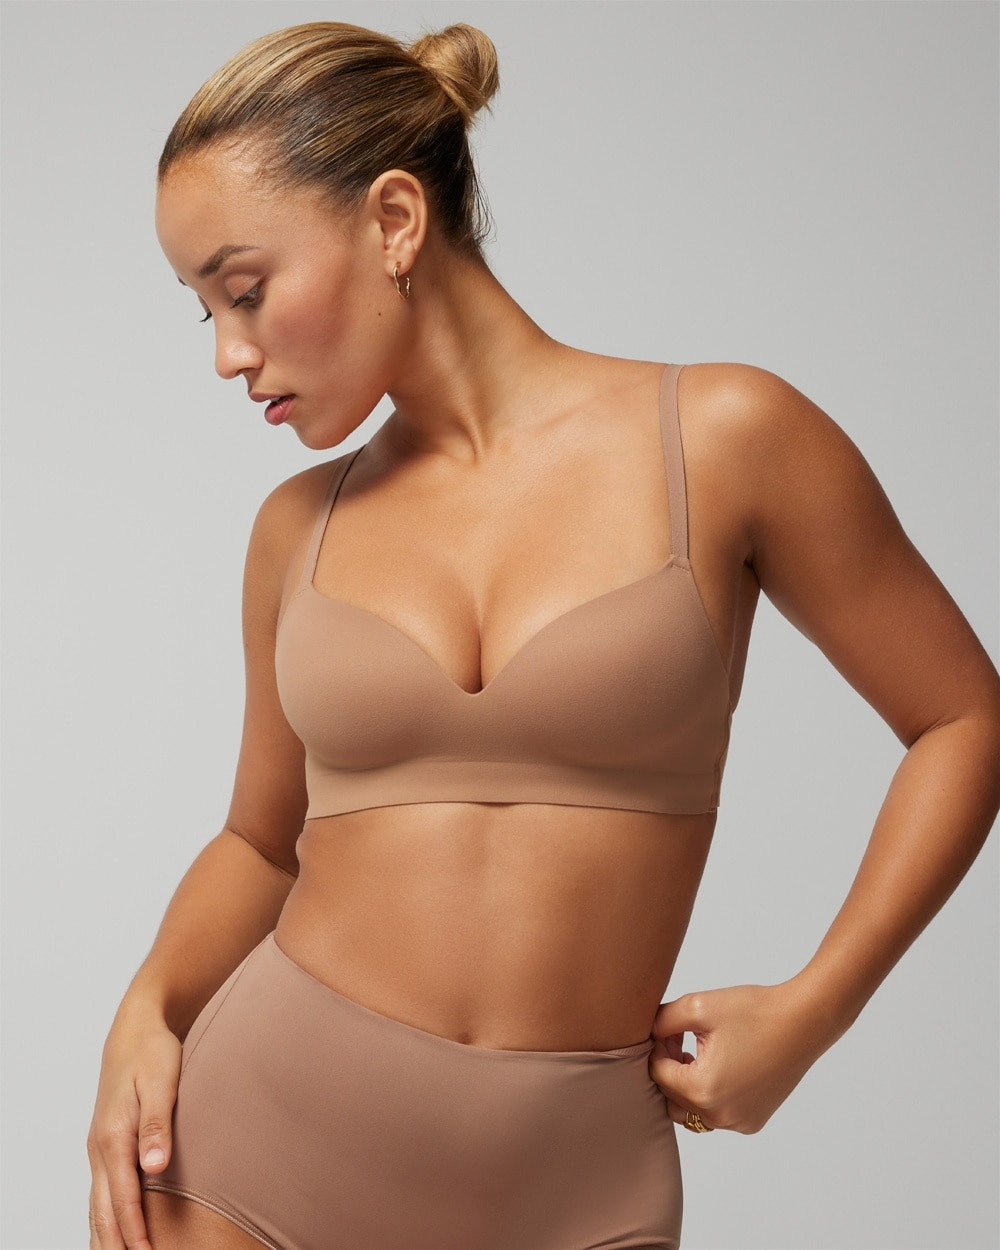 Victoria secret bra Size 36D Selling simply due to - Depop